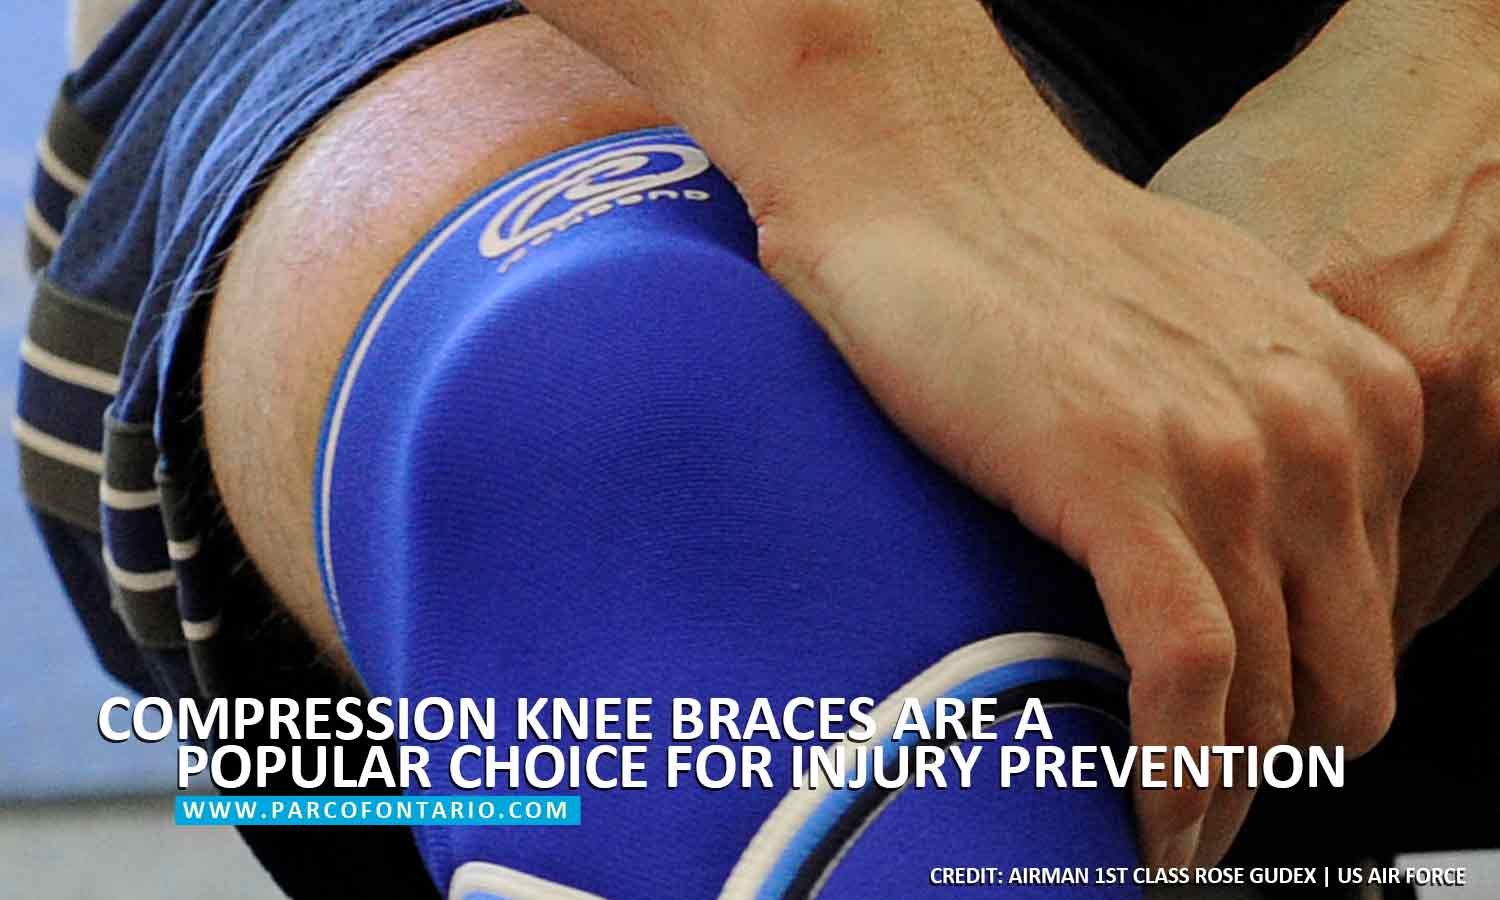 Compression knee braces are a popular